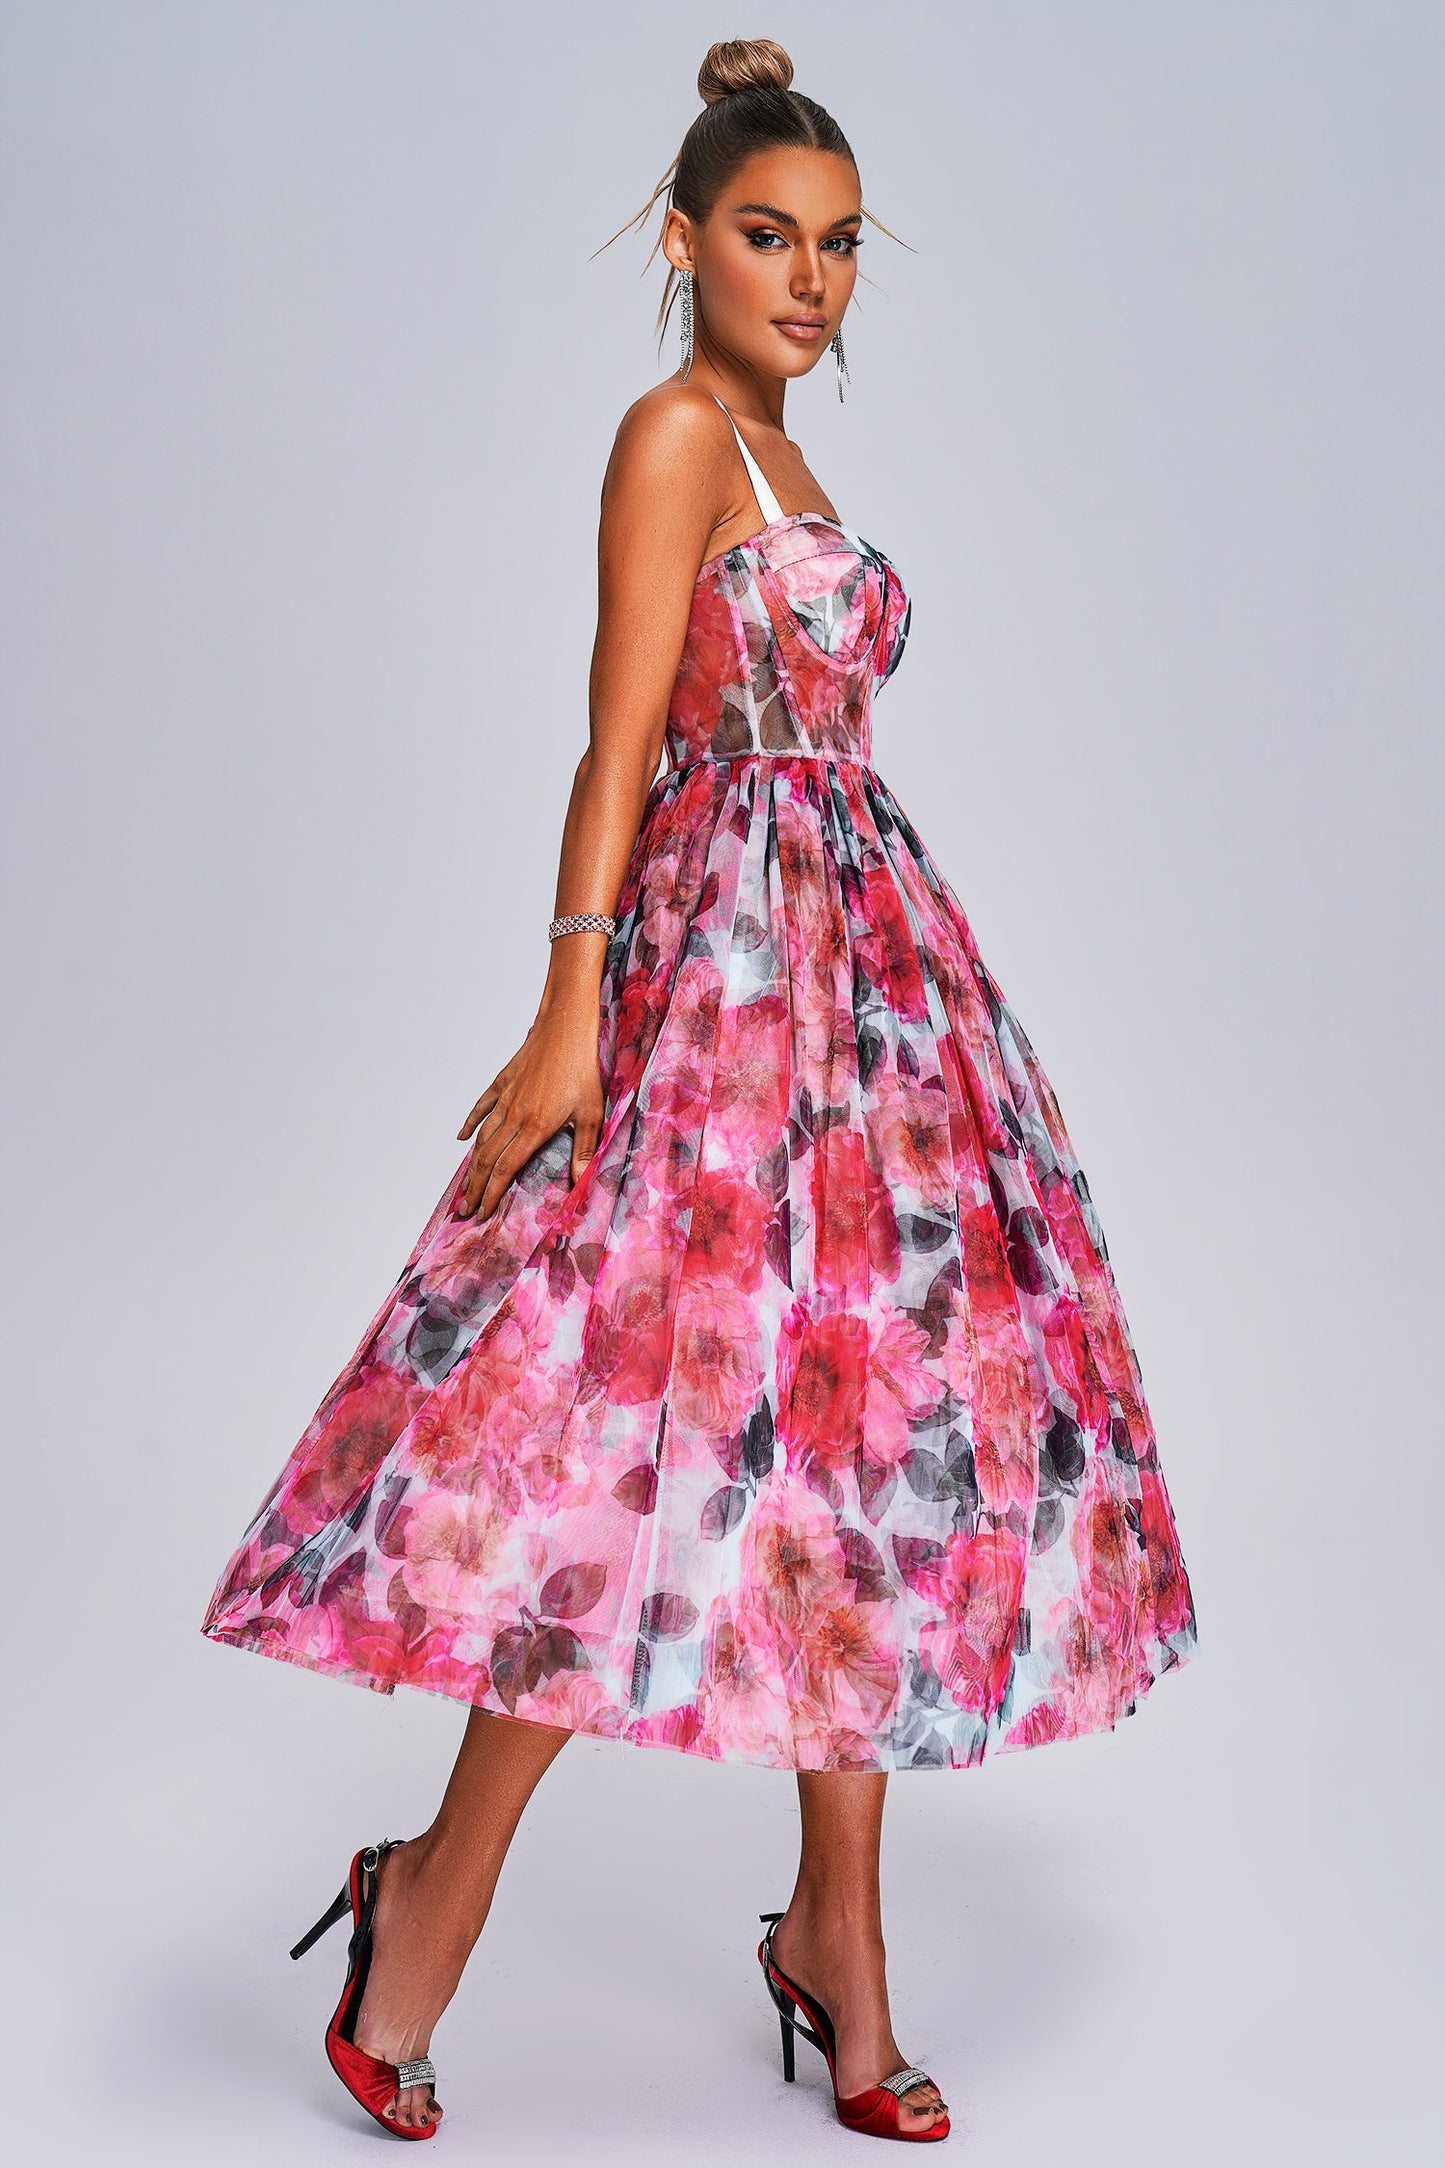 Floral Chiffon Strap Tube Top Dress New Retro aclosy